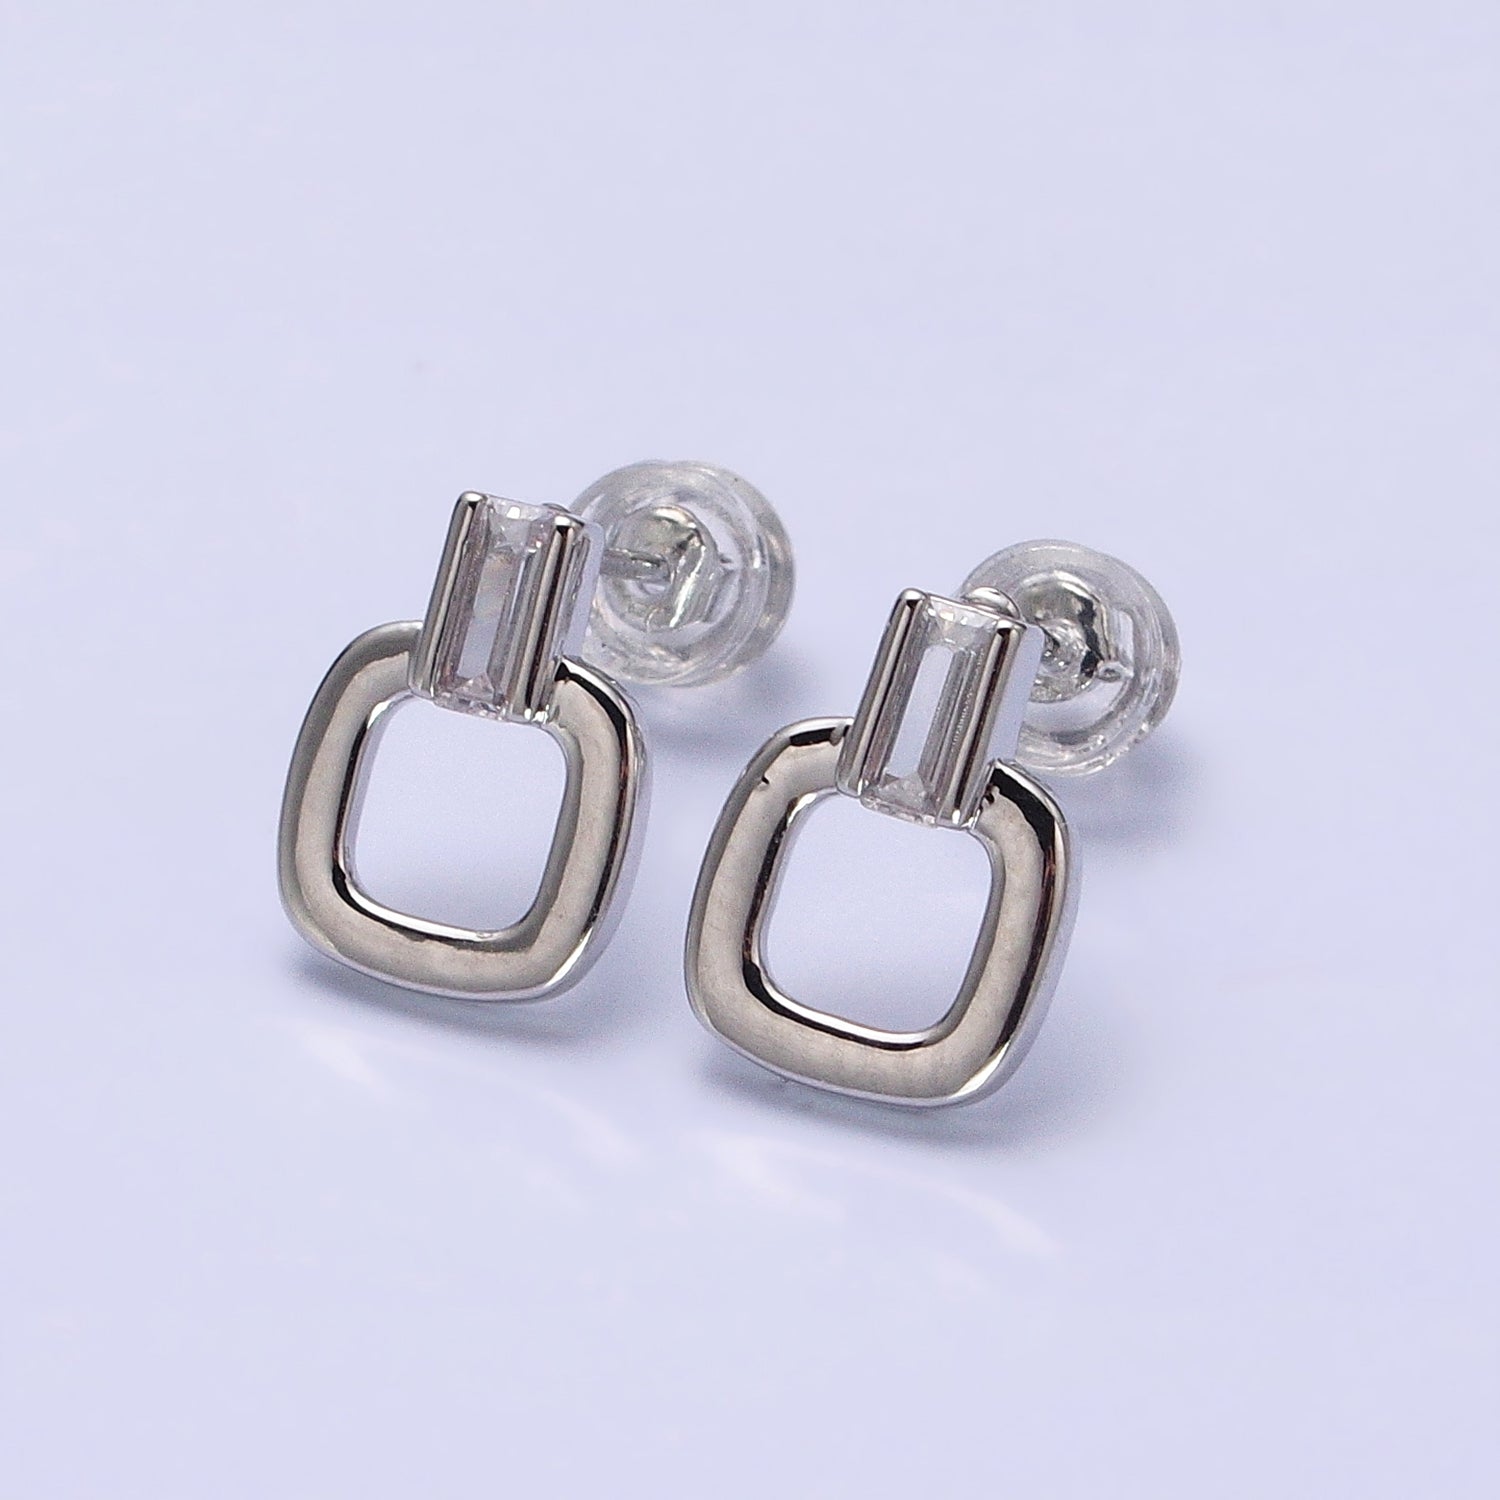 Minimalist Square Stud Earrings, Silver and Gold Modern Geometric Stud Earrings AB641 AB642 - DLUXCA